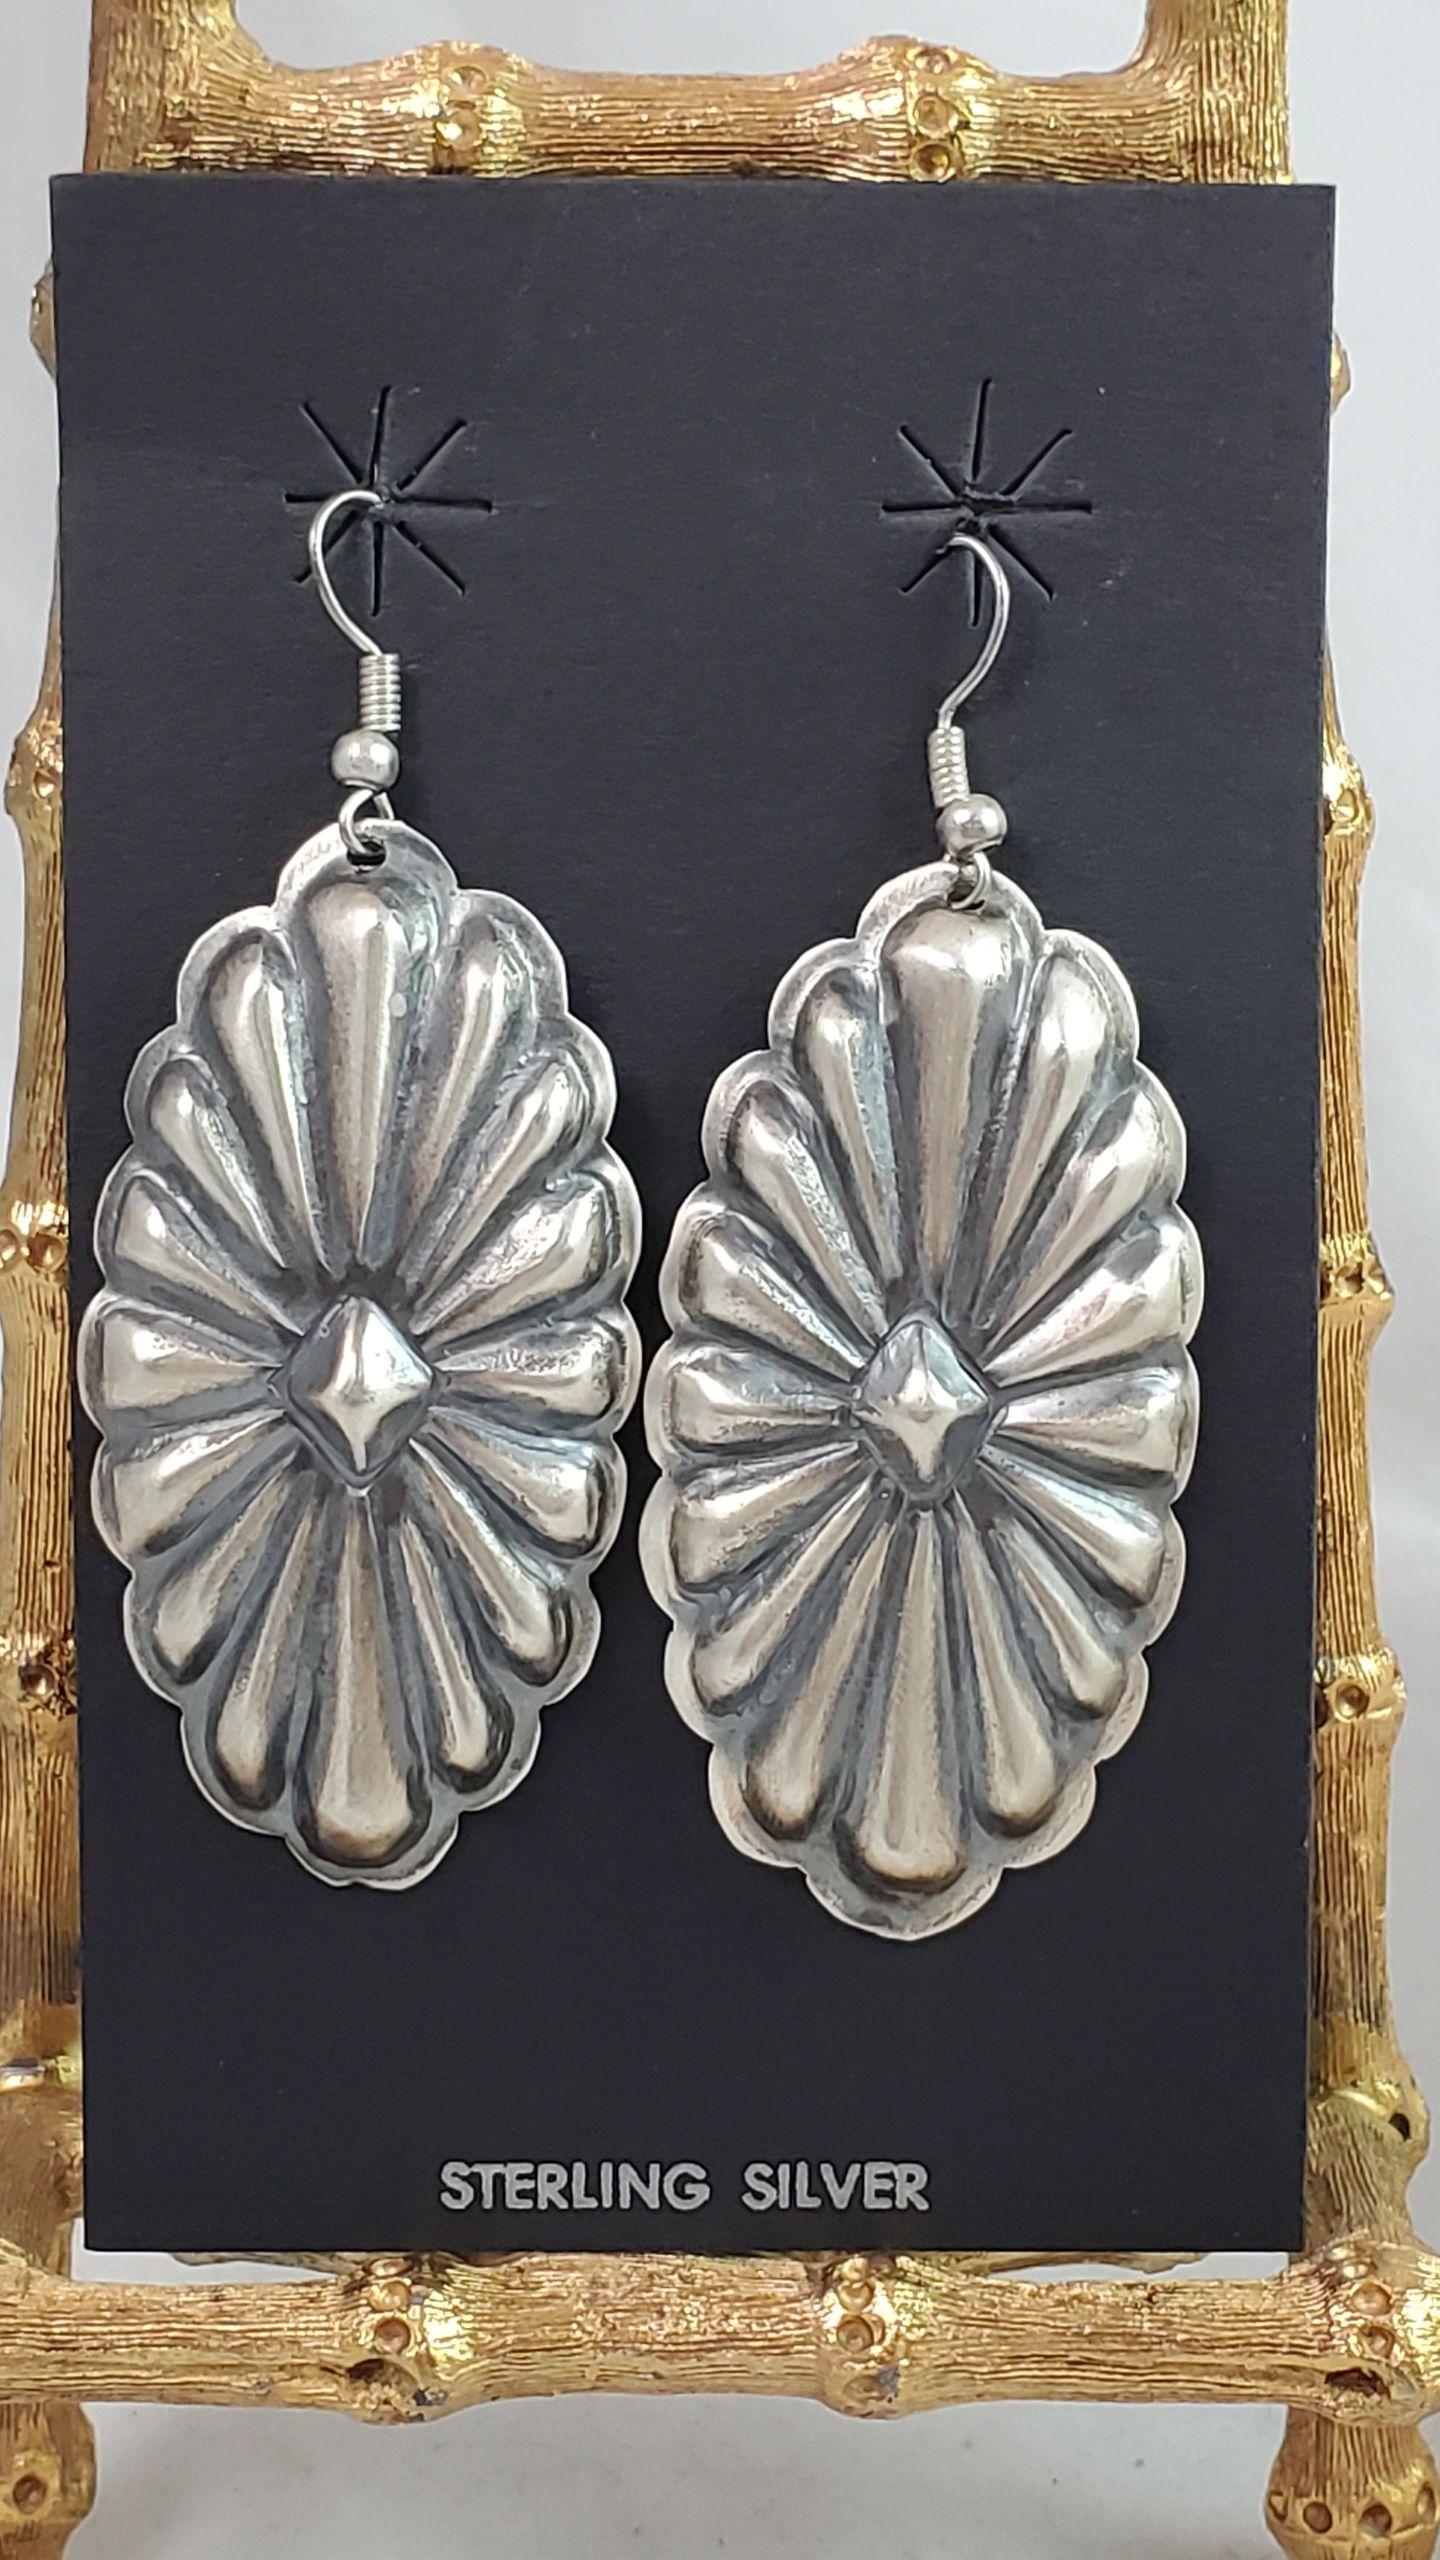 Scalloped oval concho earrings - Albuquerque Pawn Shop